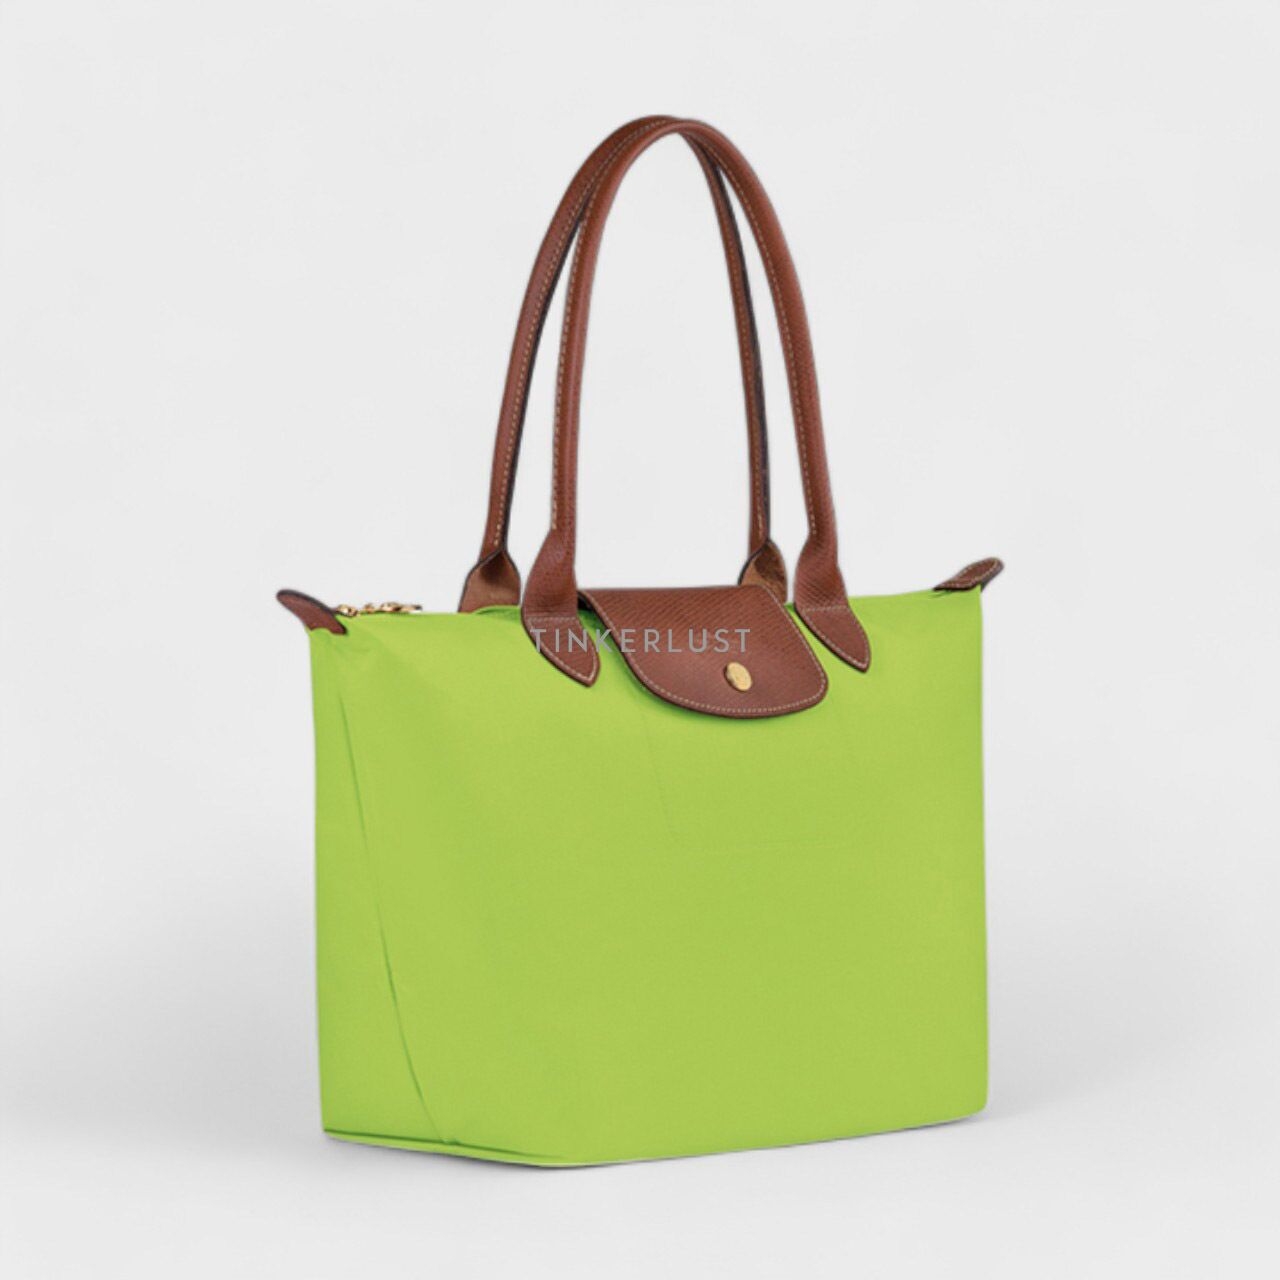 Longchamp Medium Le Pliage in Light Green Tote Bag 